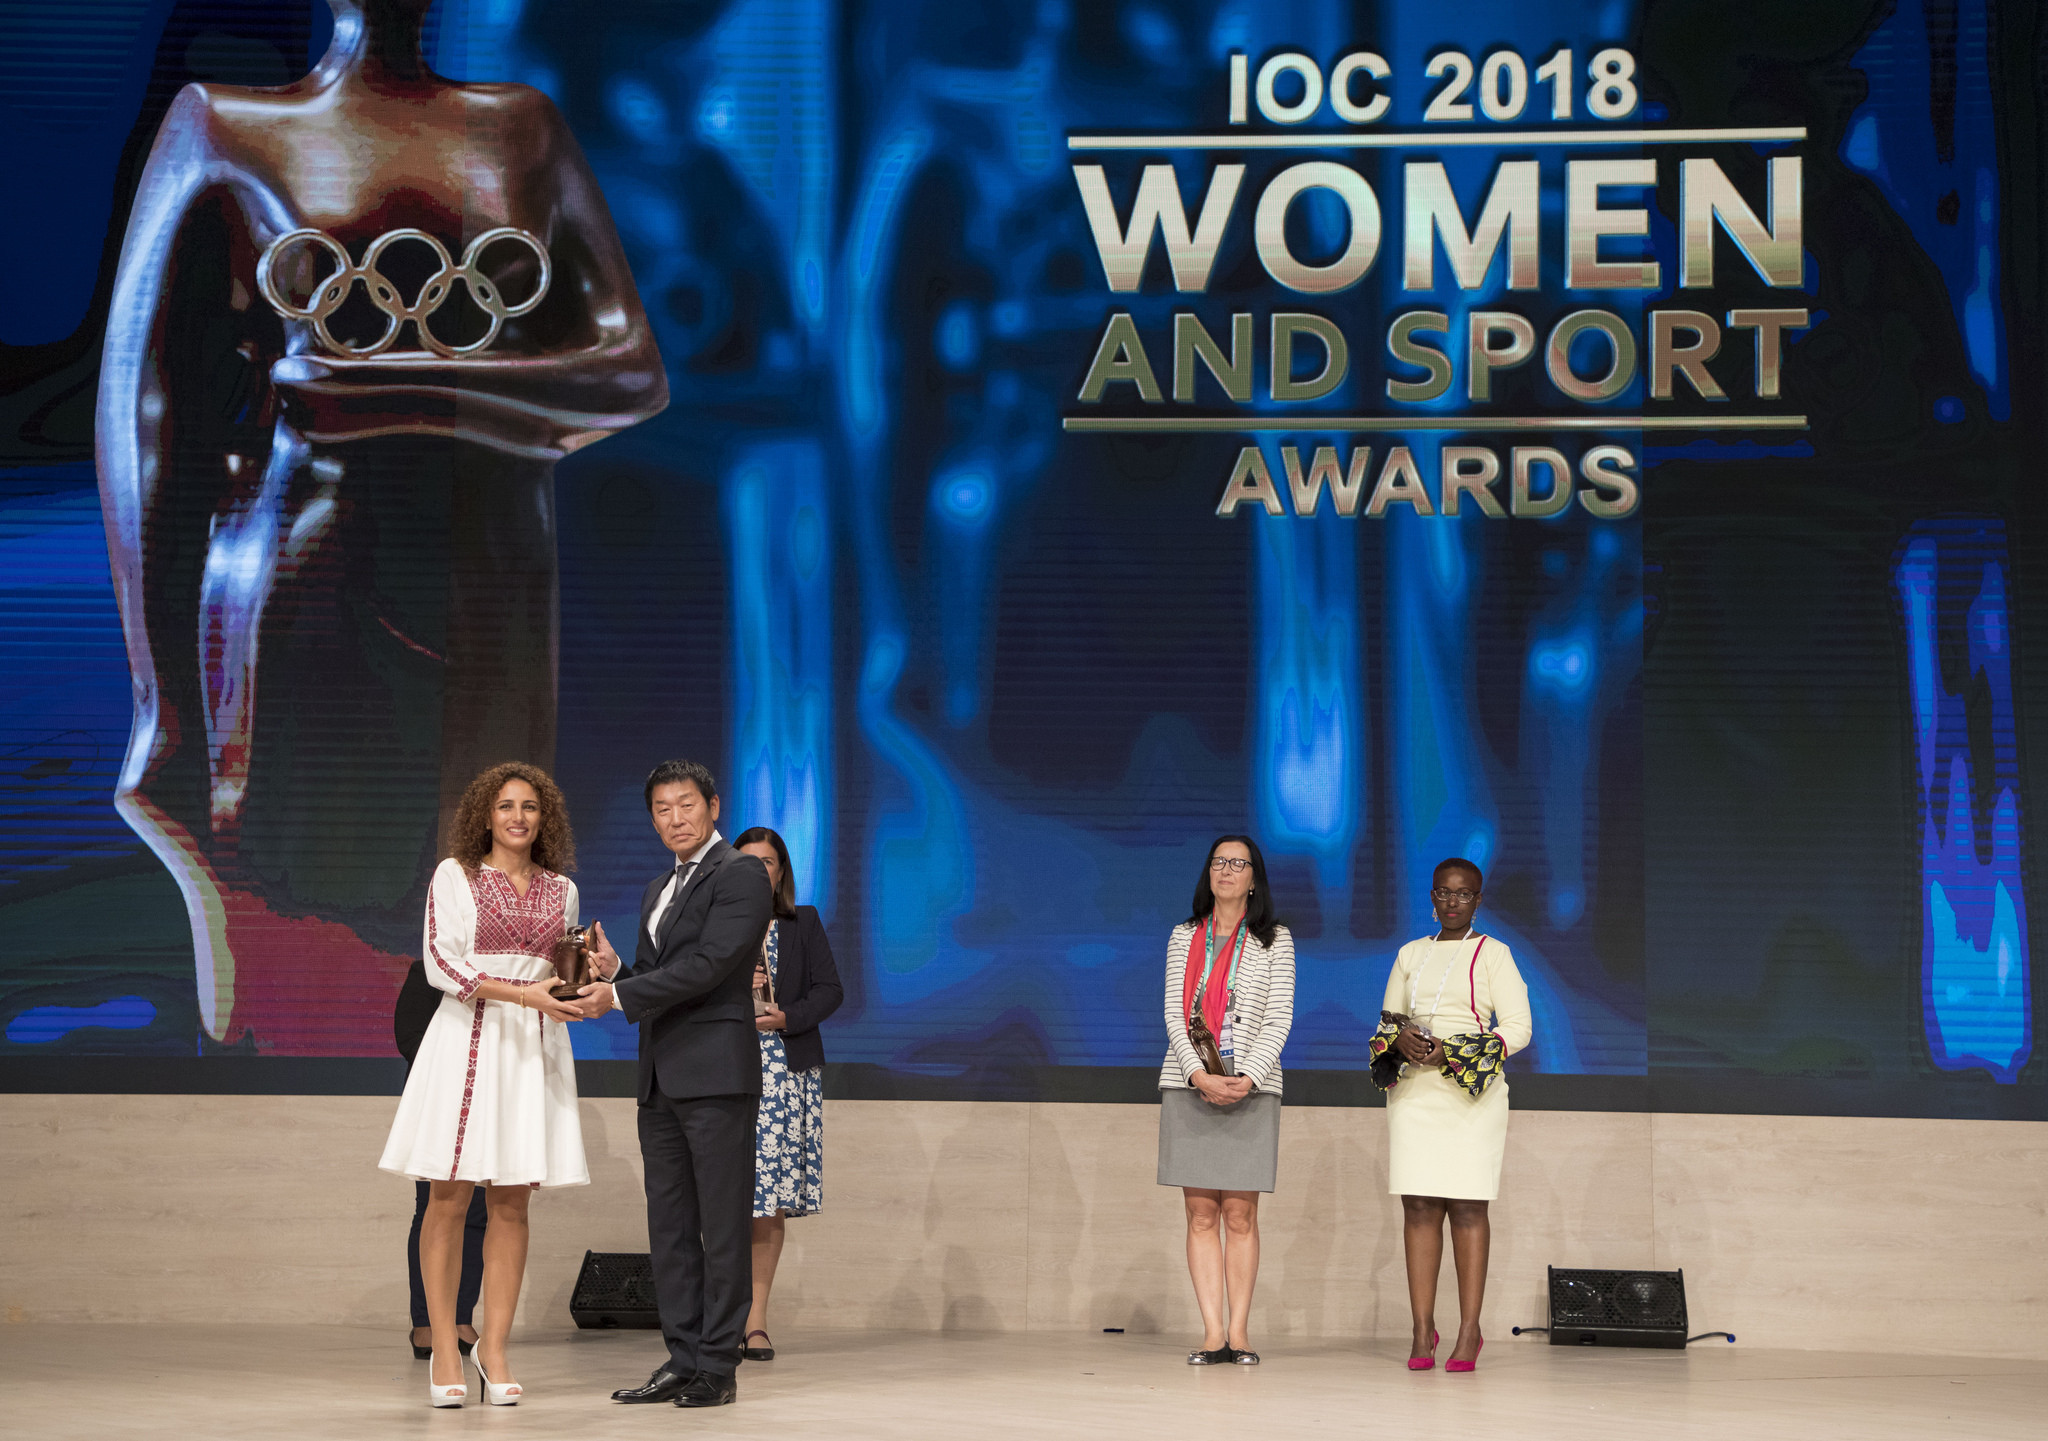 The Jordan Olympic Committee's Samar Nassar was among the winners of Women and Sport awards ©IOC